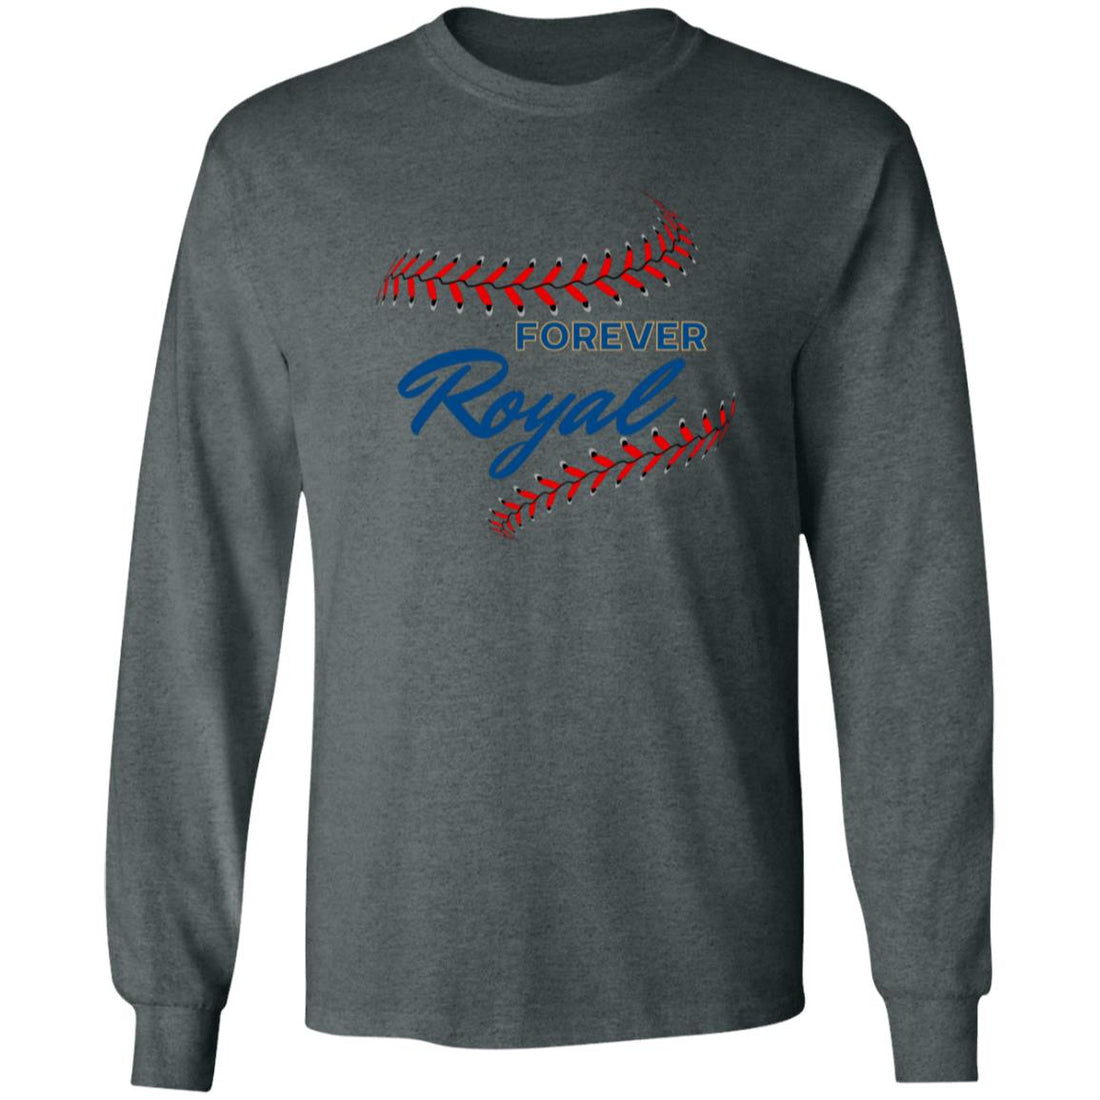 Forever Royal LS Cotton T-Shirt - T-Shirts - Positively Sassy - Forever Royal LS Cotton T-Shirt